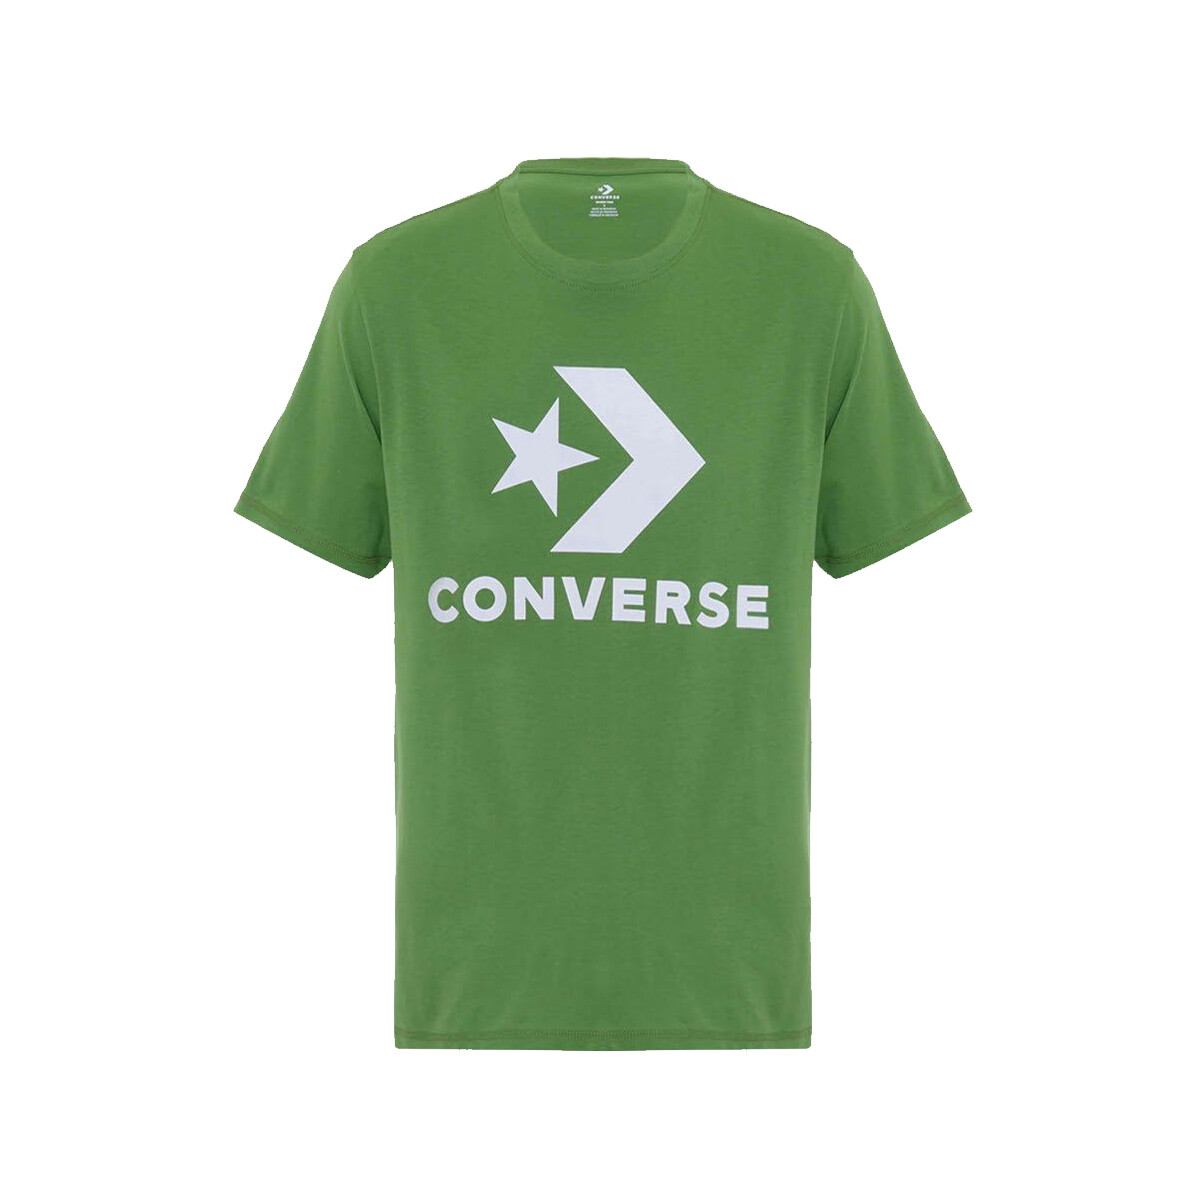 Remera Converse unisex - 10025458A01 - GREEN 